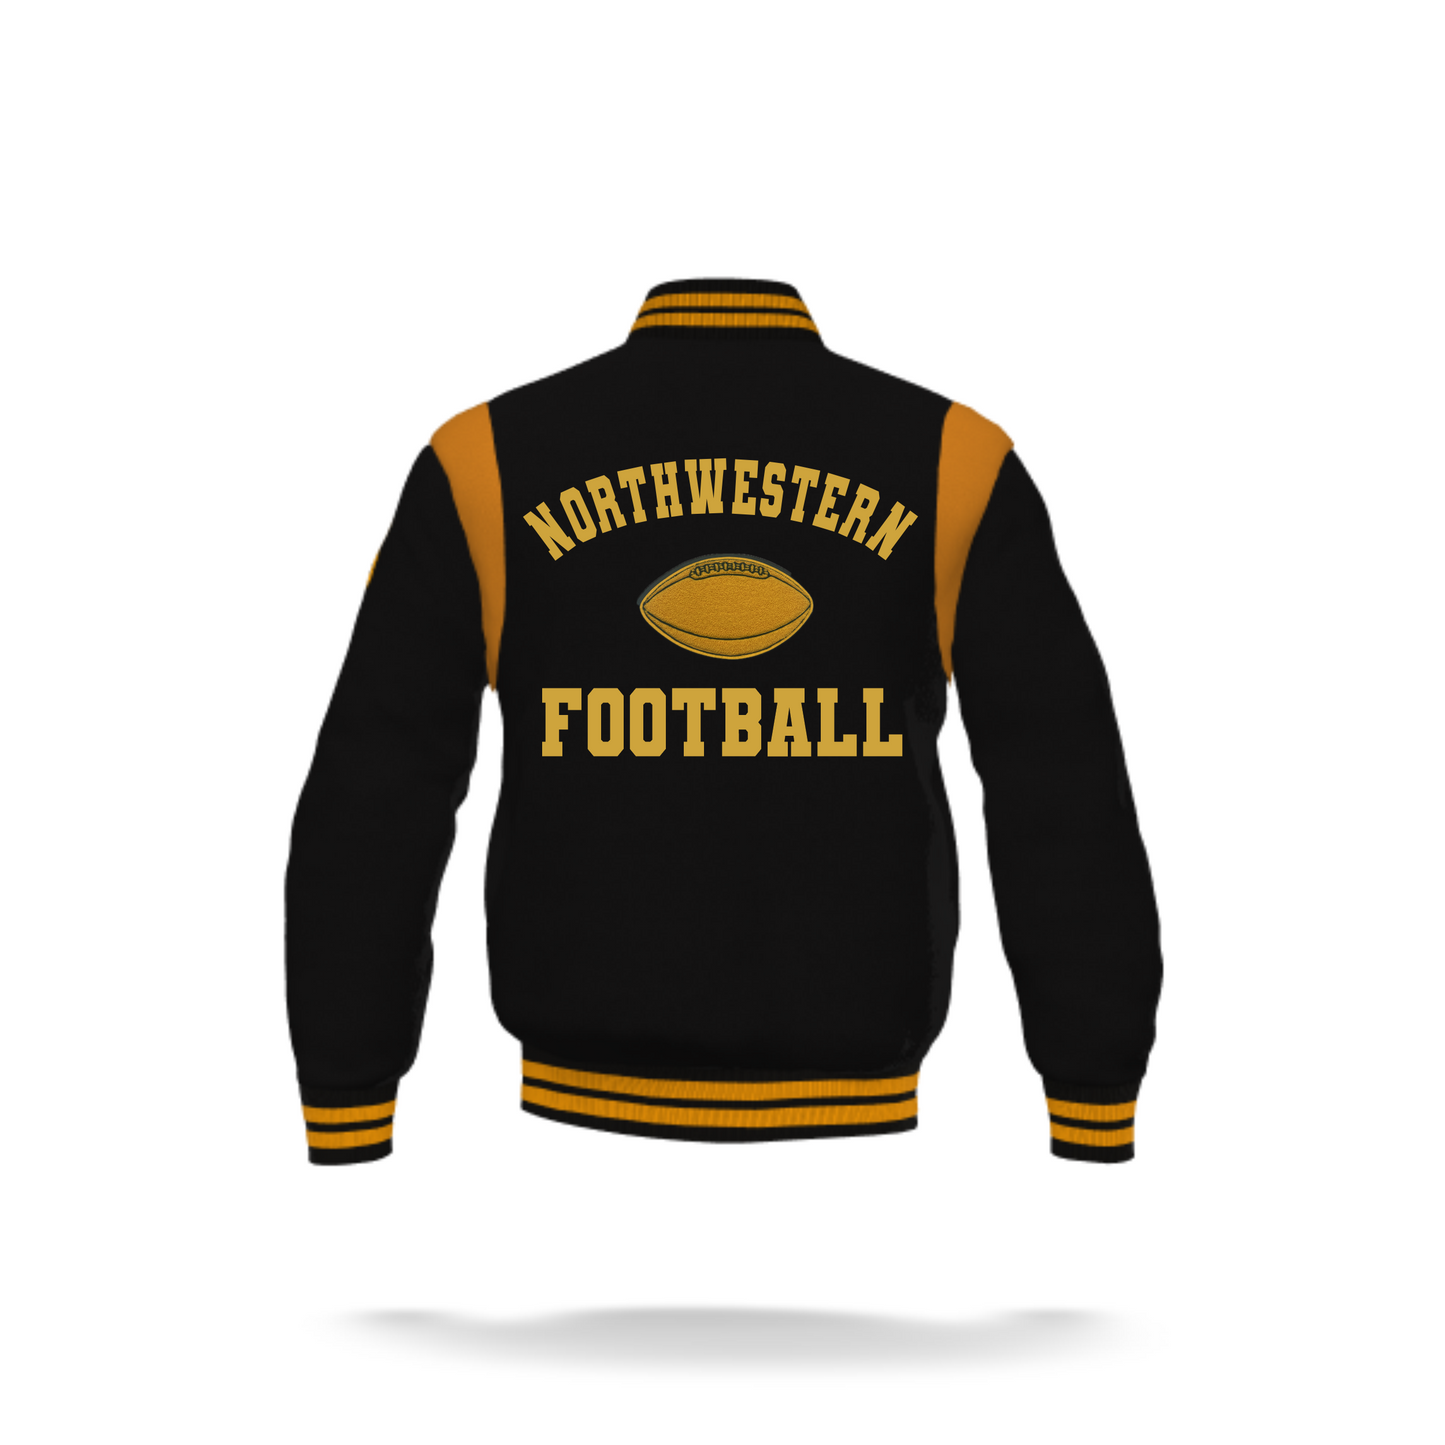 Northwestern Lehigh Varsity Jacket with Wool Sleeves and Leather inserts